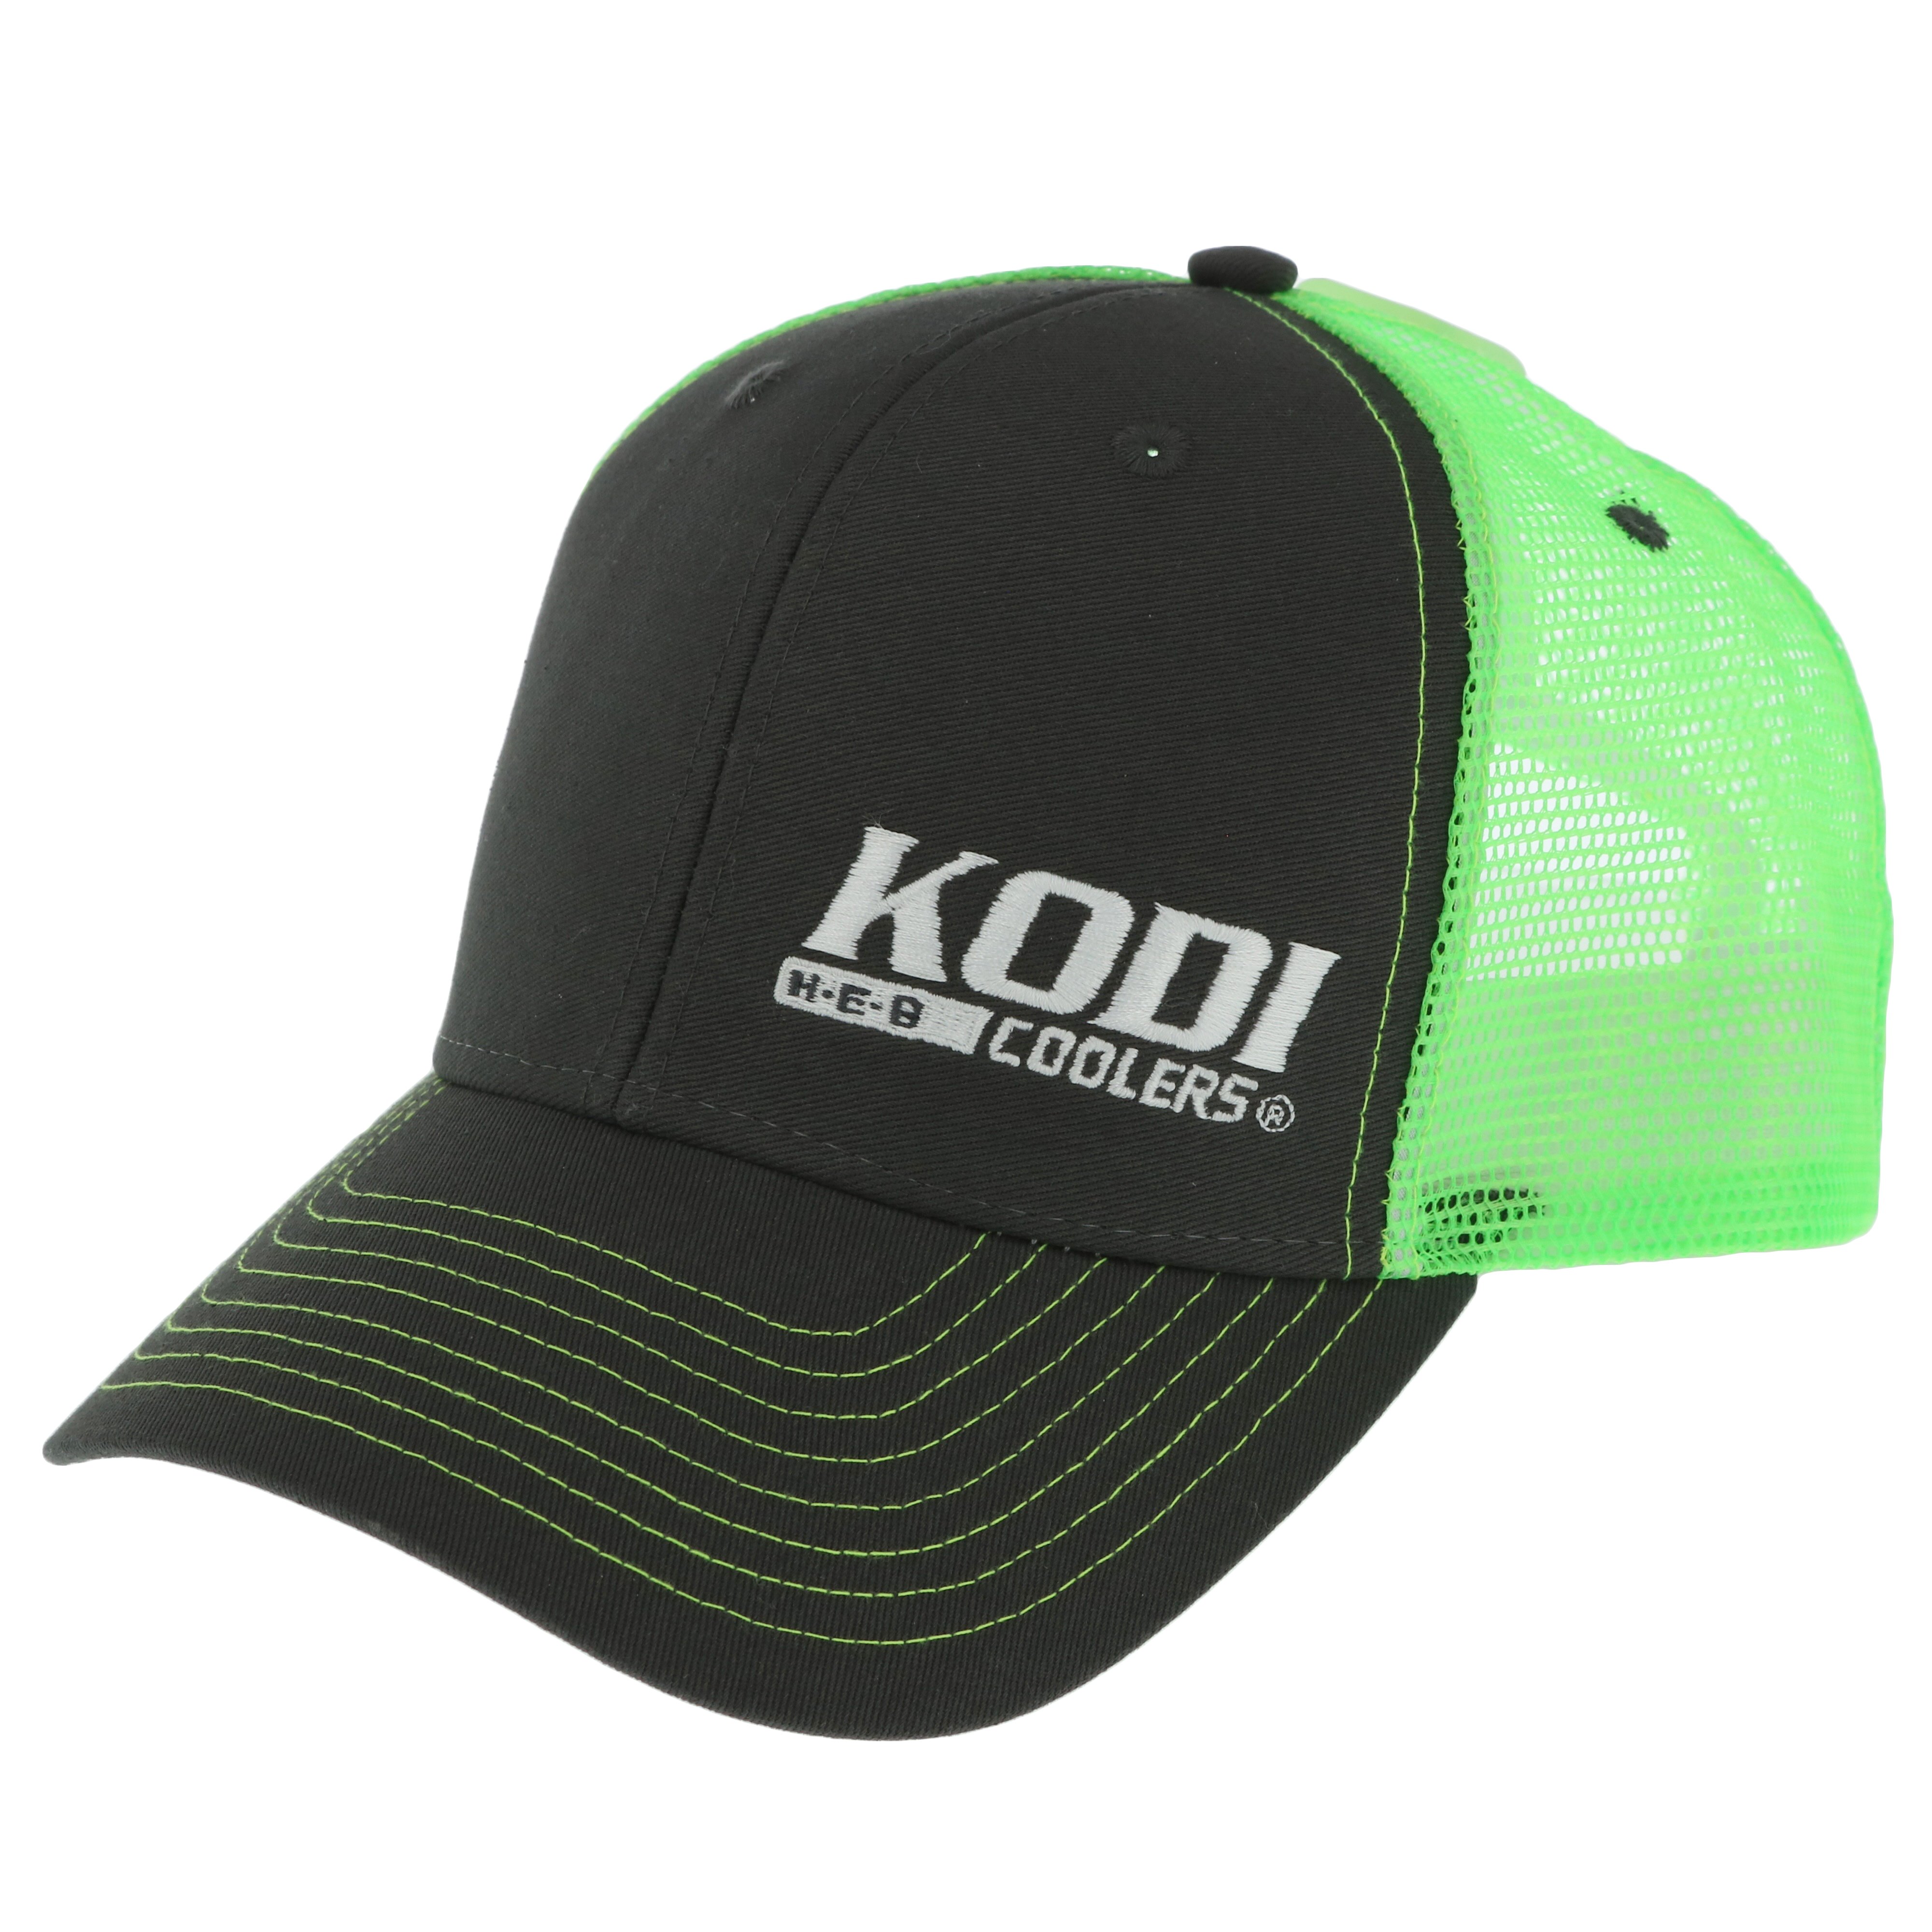 KODI Dark Gray/Neon Green Sideline Cap - Shop Hats at H-E-B